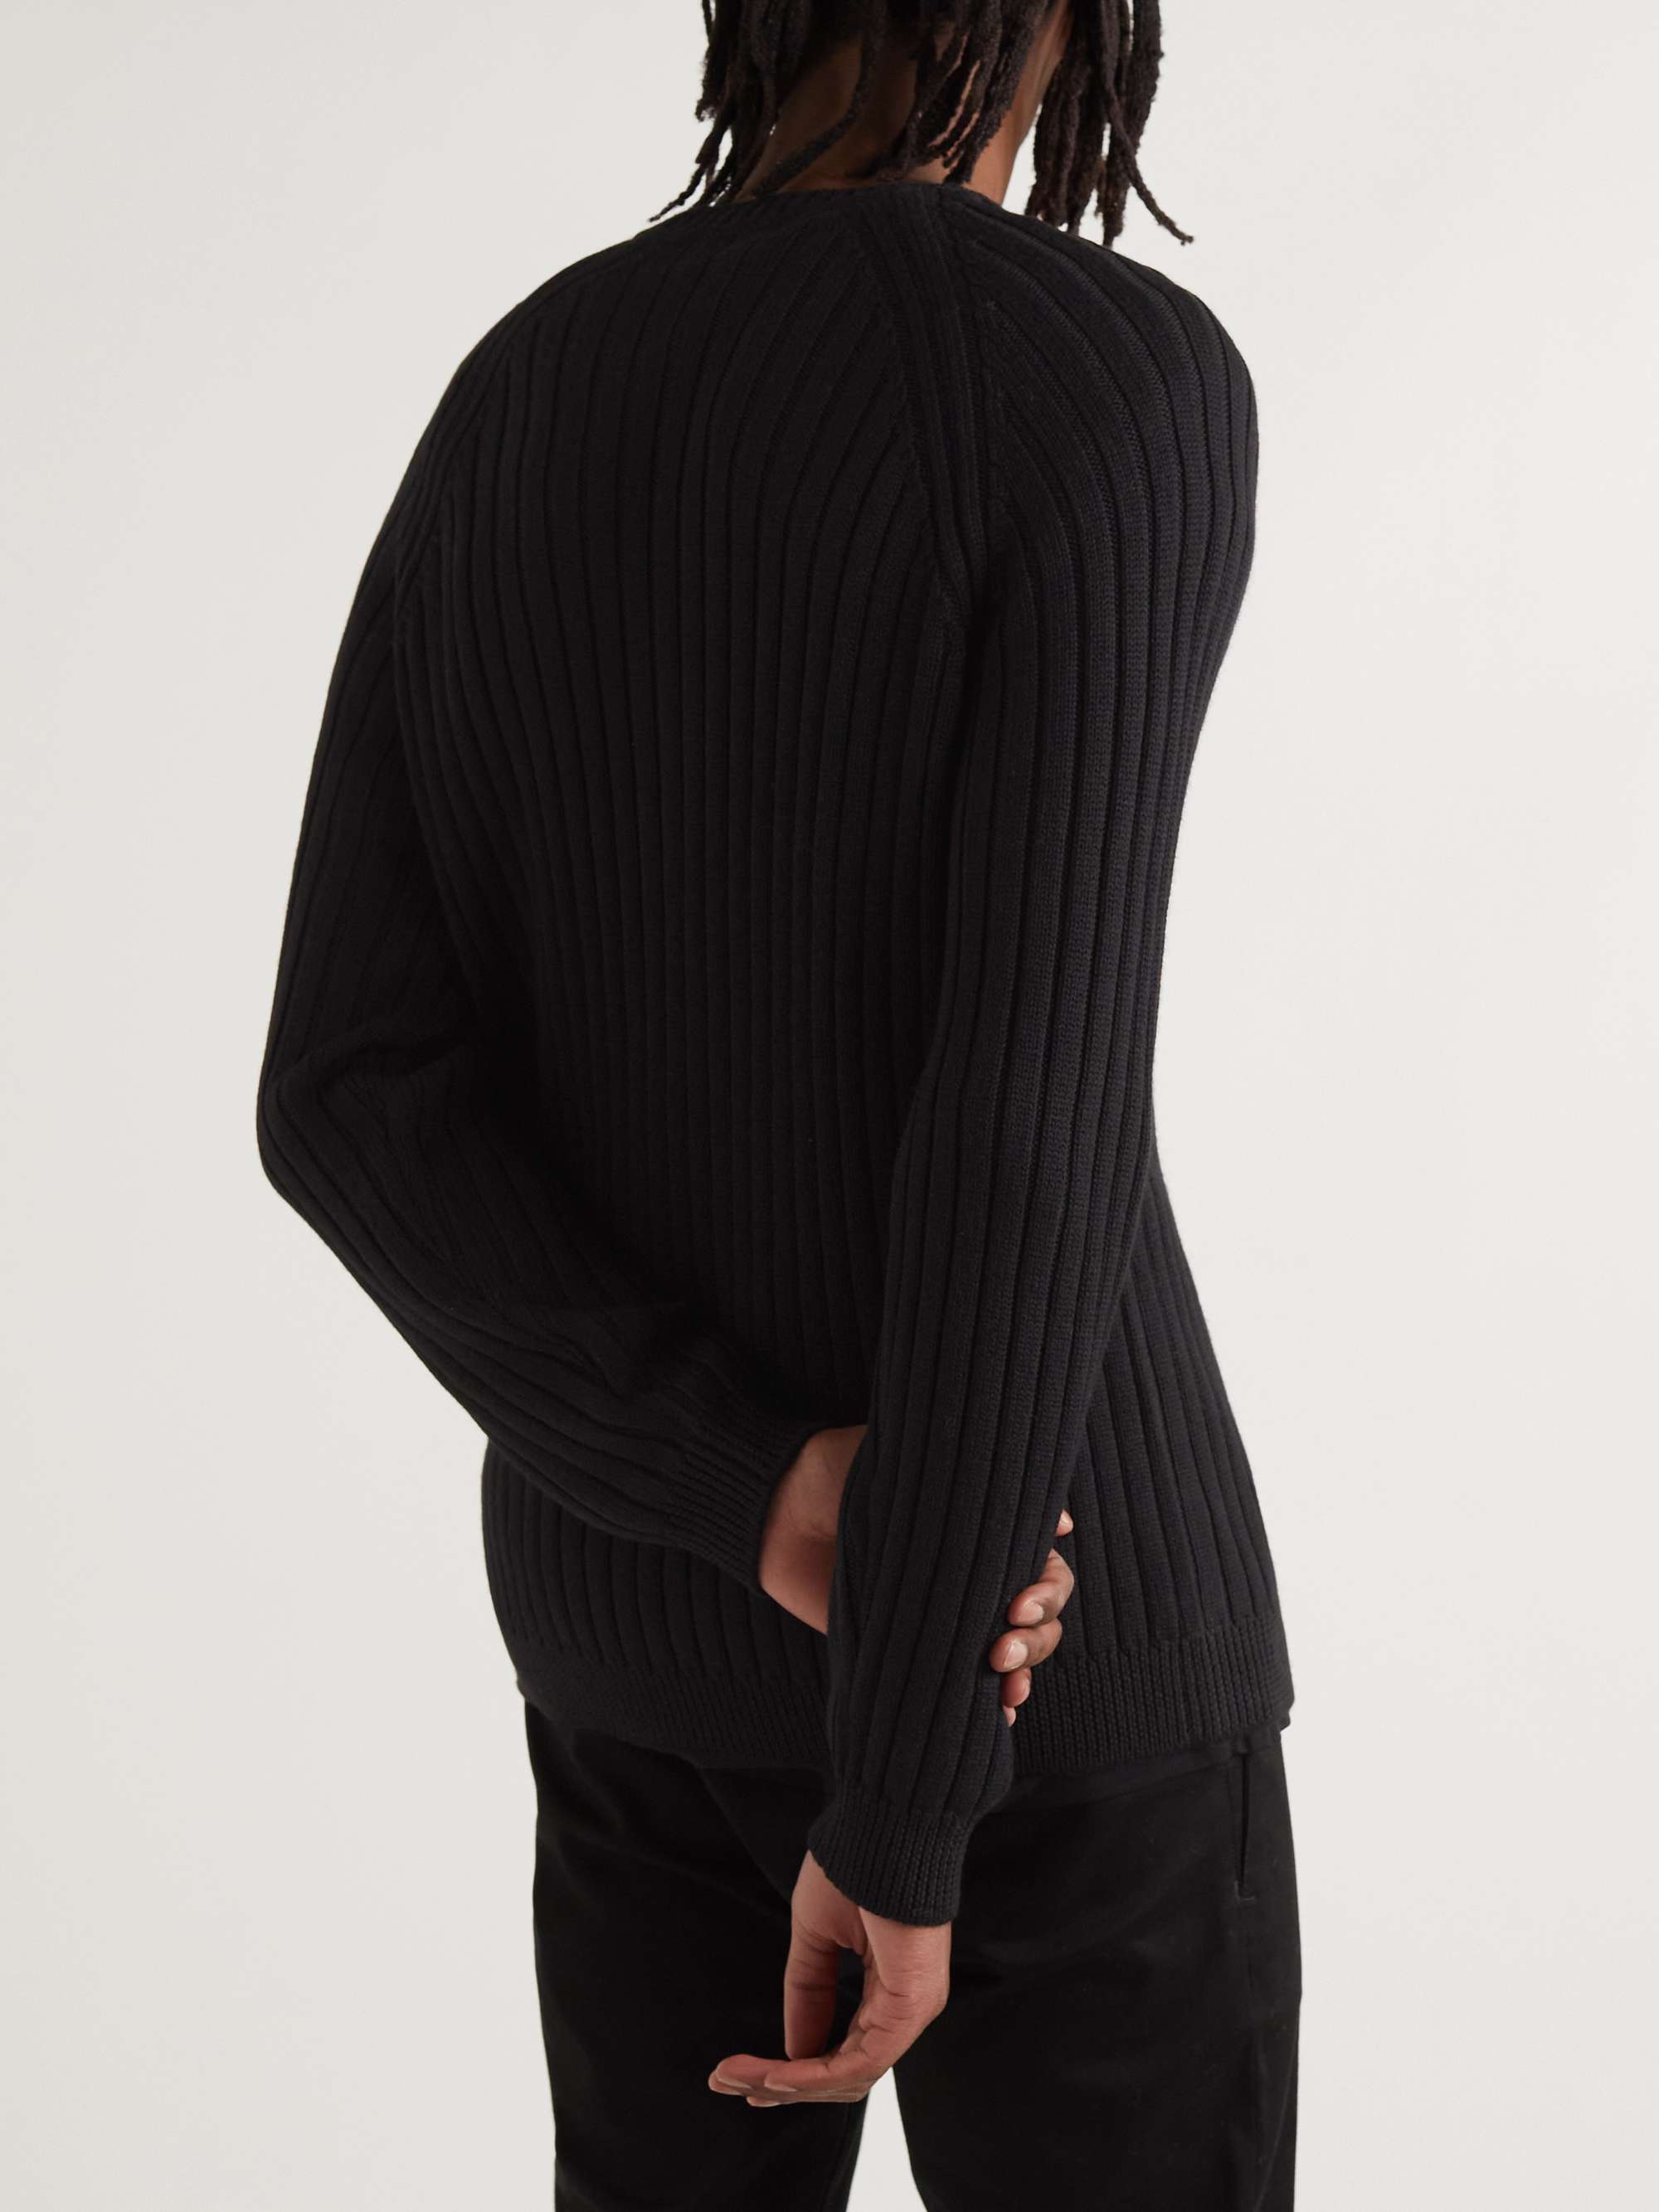 FENDI + Noel Fielding Slim-Fit Logo-Intarsia Ribbed Merino Wool Sweater